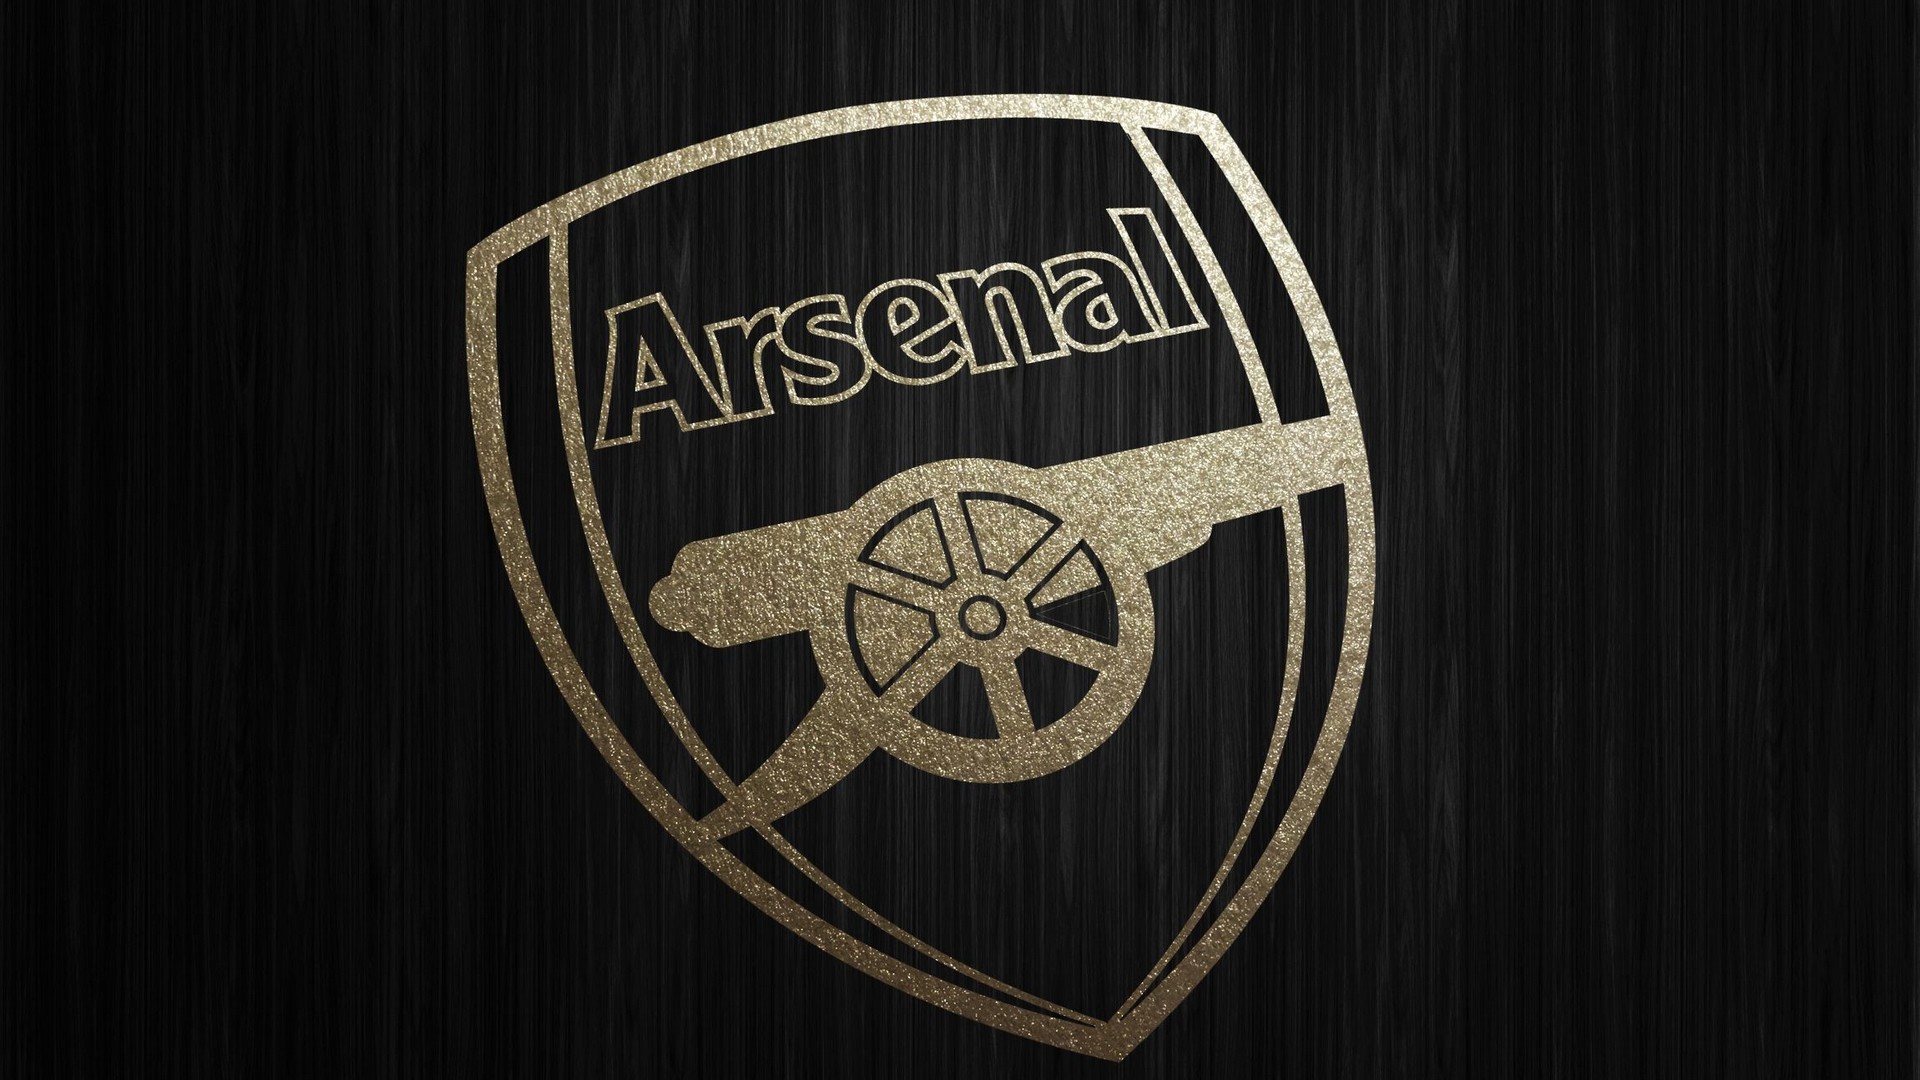 Arsenal Fc Wallpaper / Arsenal Football Club Wallpaper - Football ...